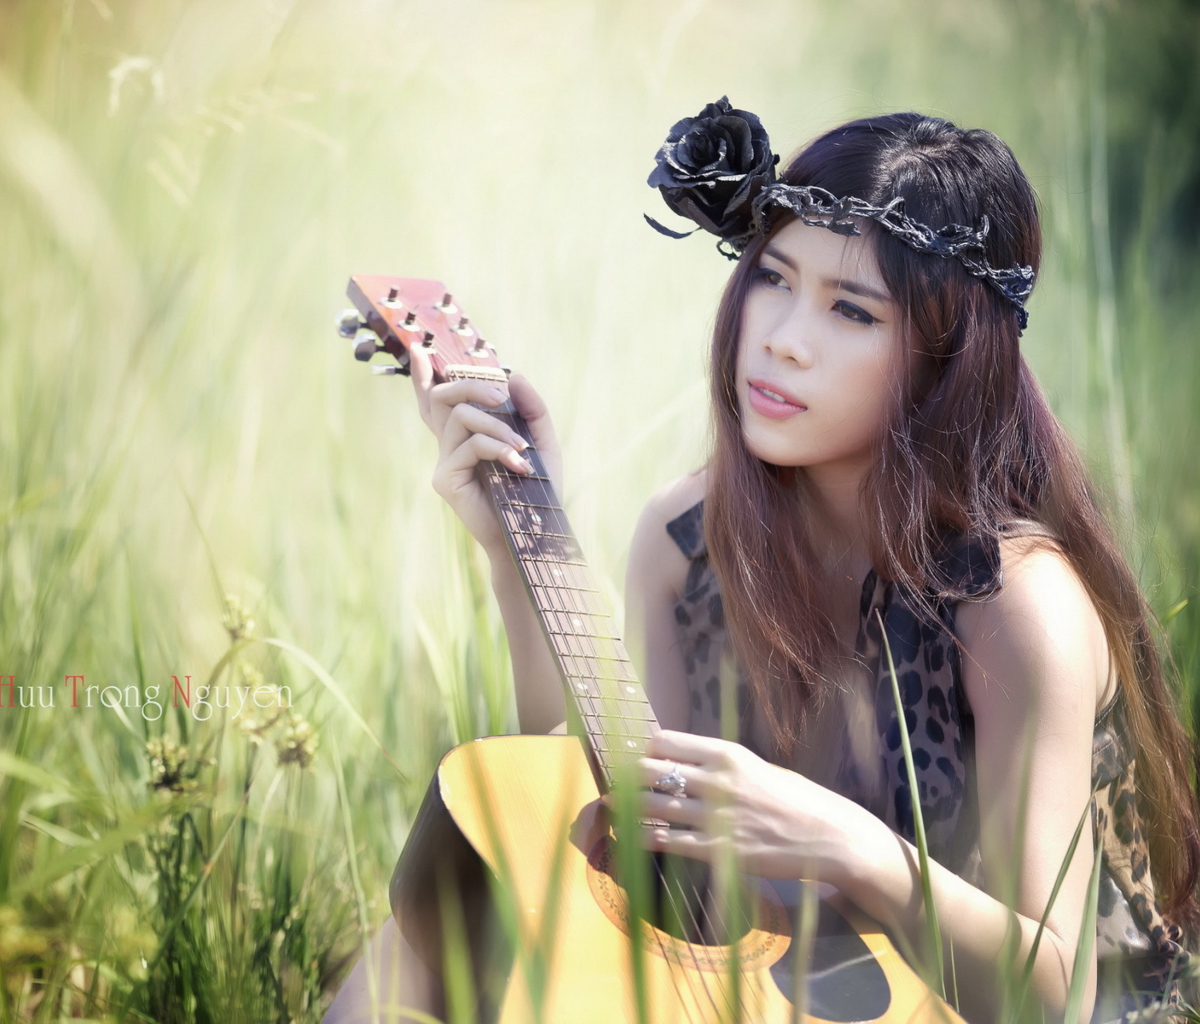 Pretty Girl In Grass Playing Guitar wallpaper 1200x1024